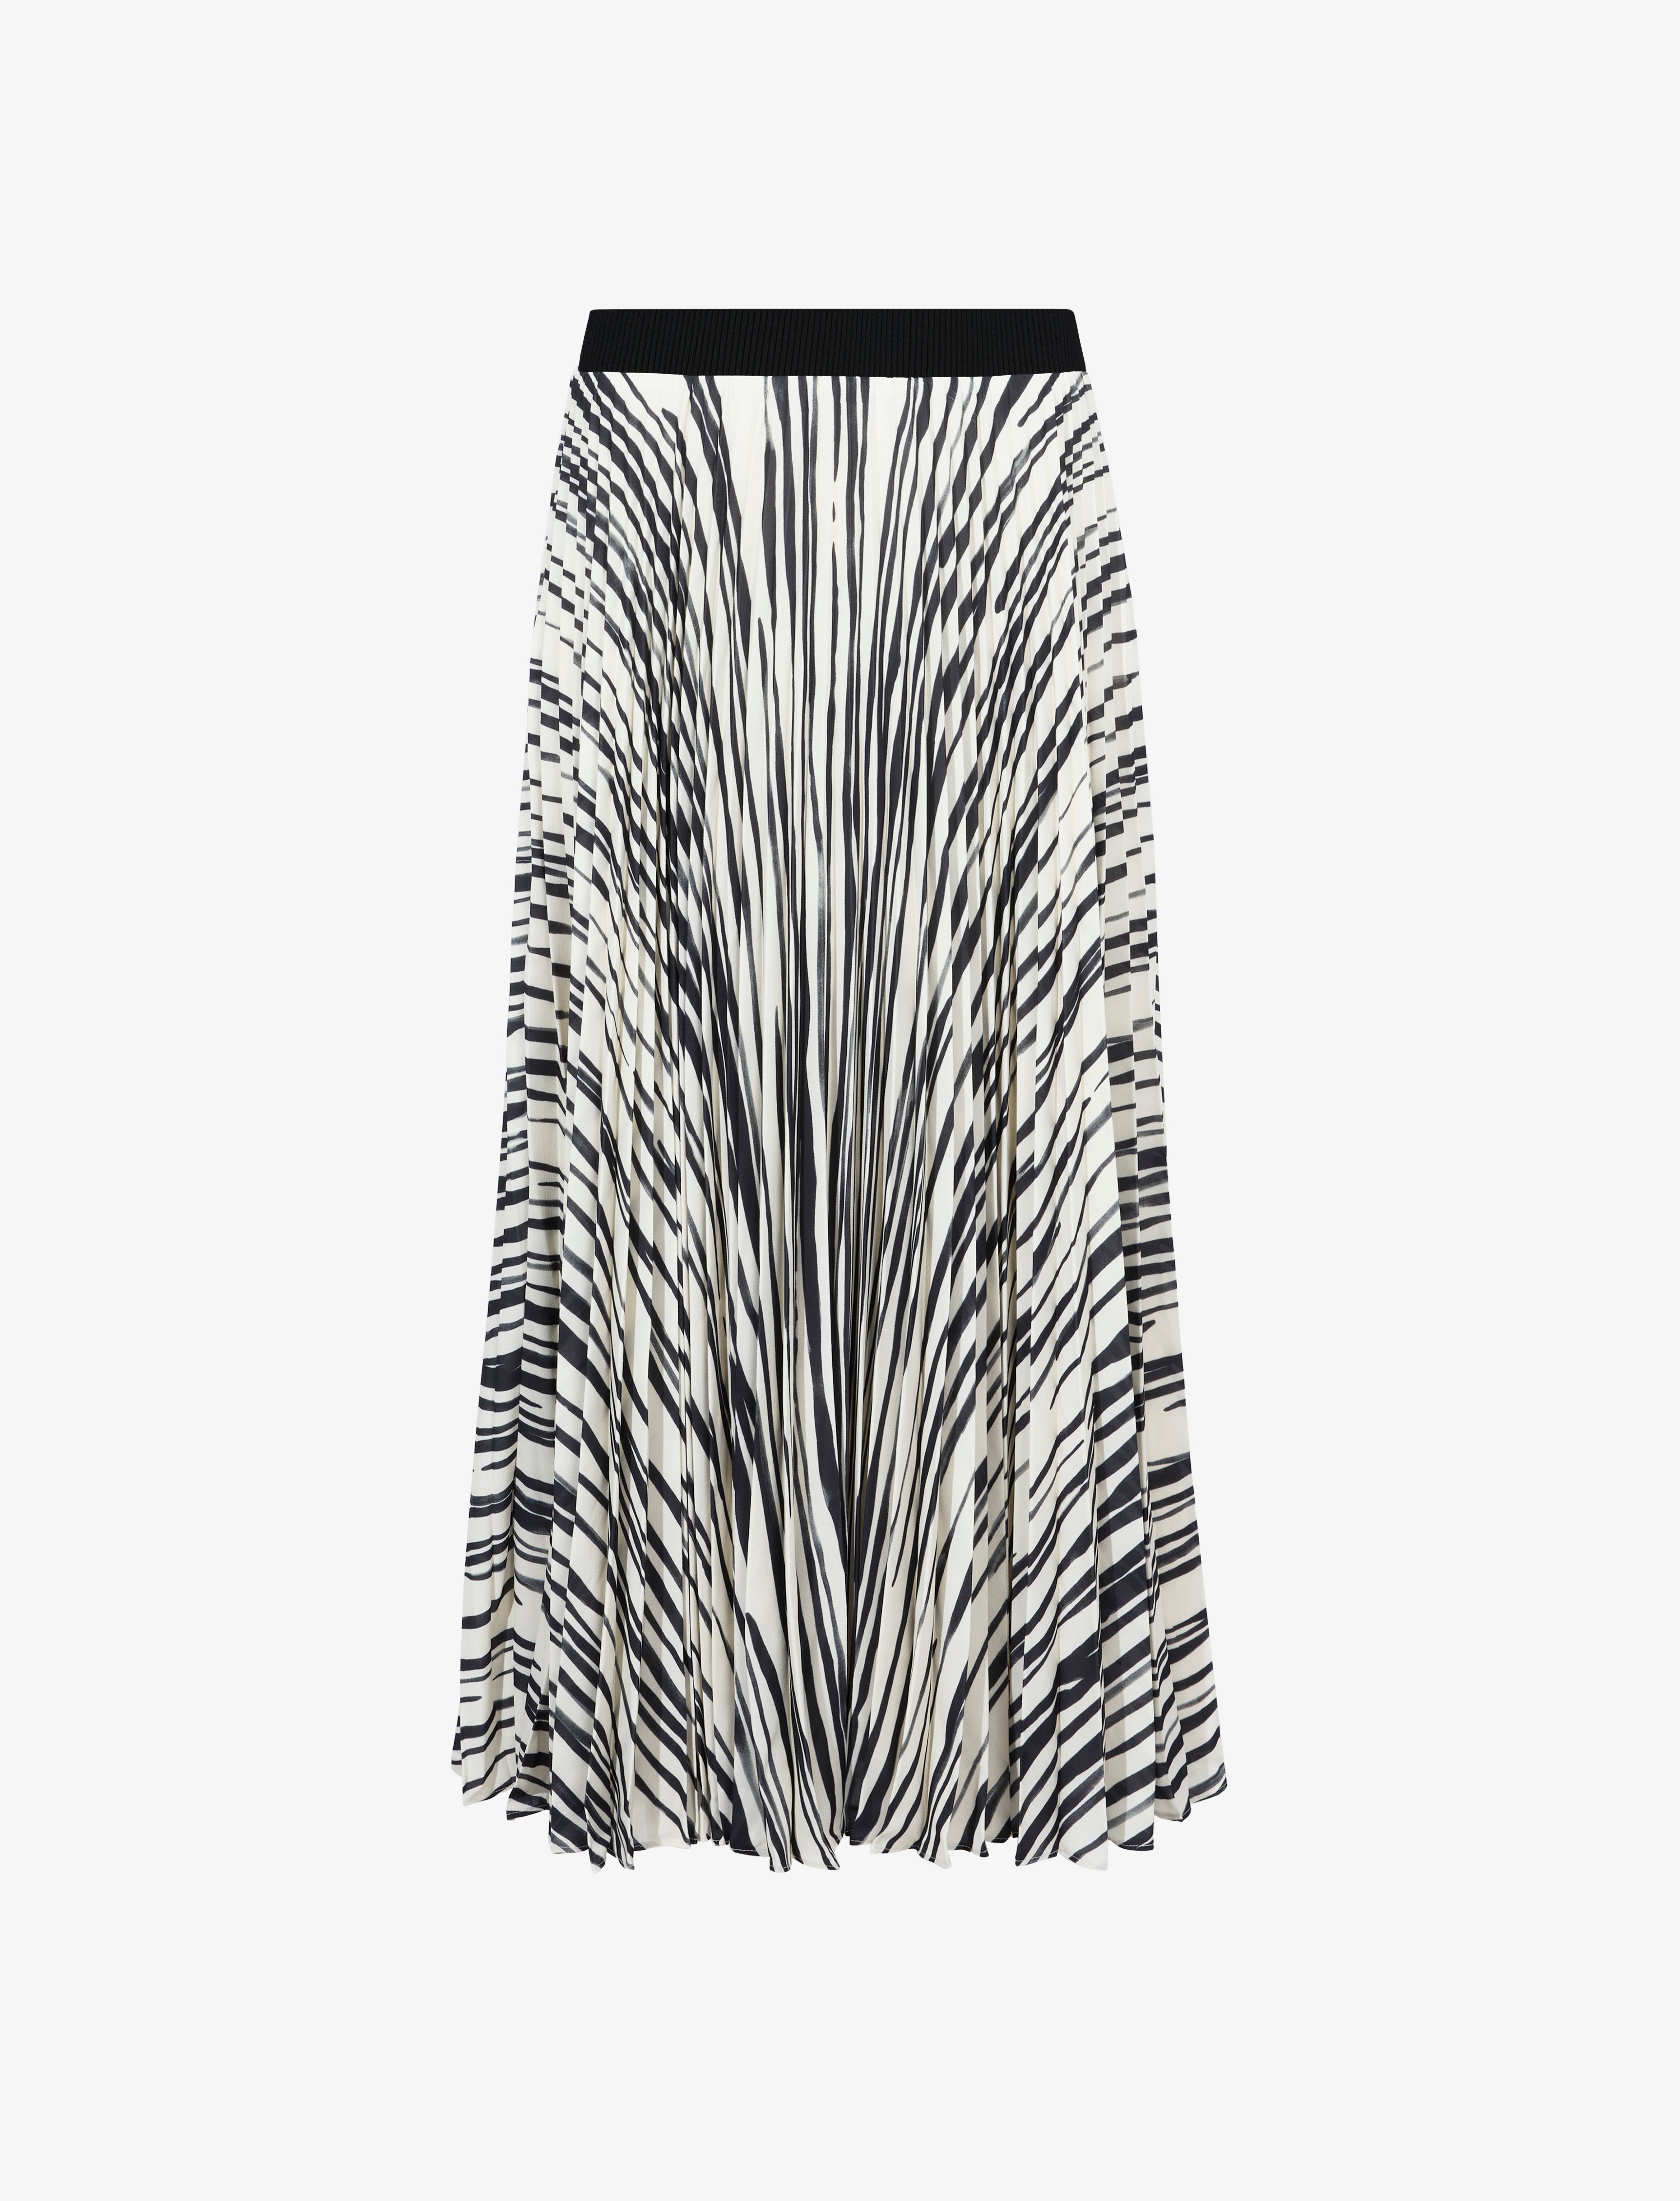 Pleated Printed Korine Schouler – in Skirt Sheer Chiffon Proenza